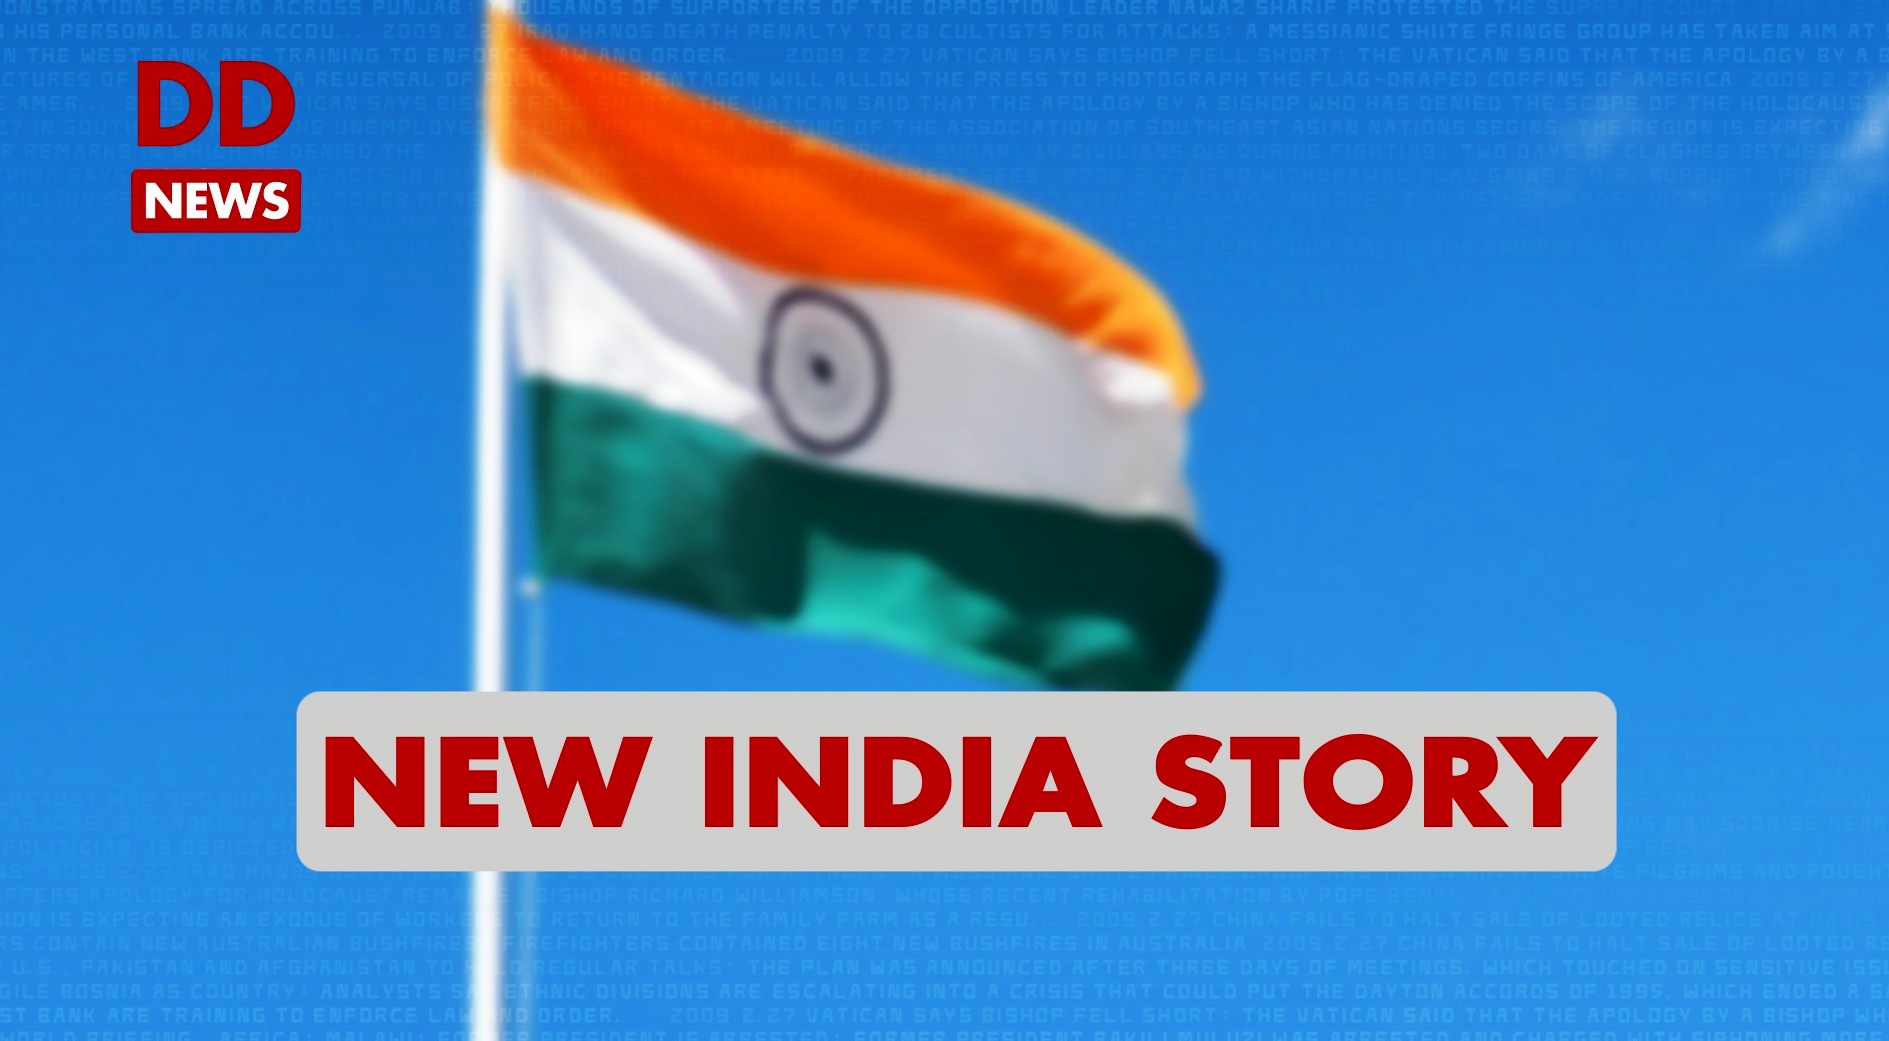 New India Story / Tamil Naidu/ Nagapattinam / Pradhan Mantri Awas Yojana